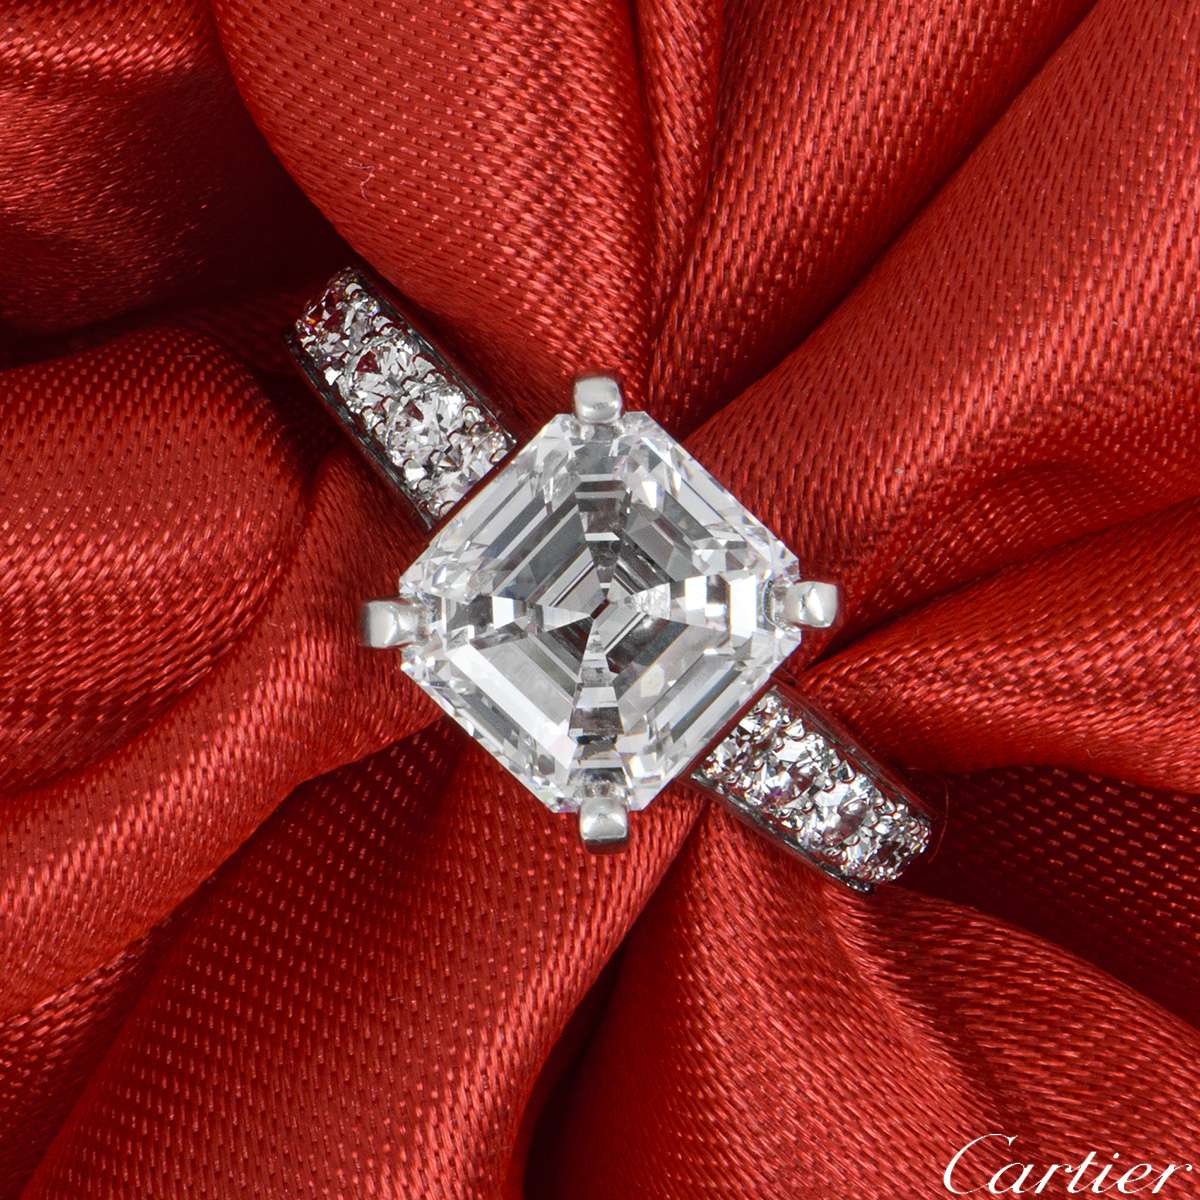 Cartier 1895 Round Brilliant Cut Diamond Stud Earrings